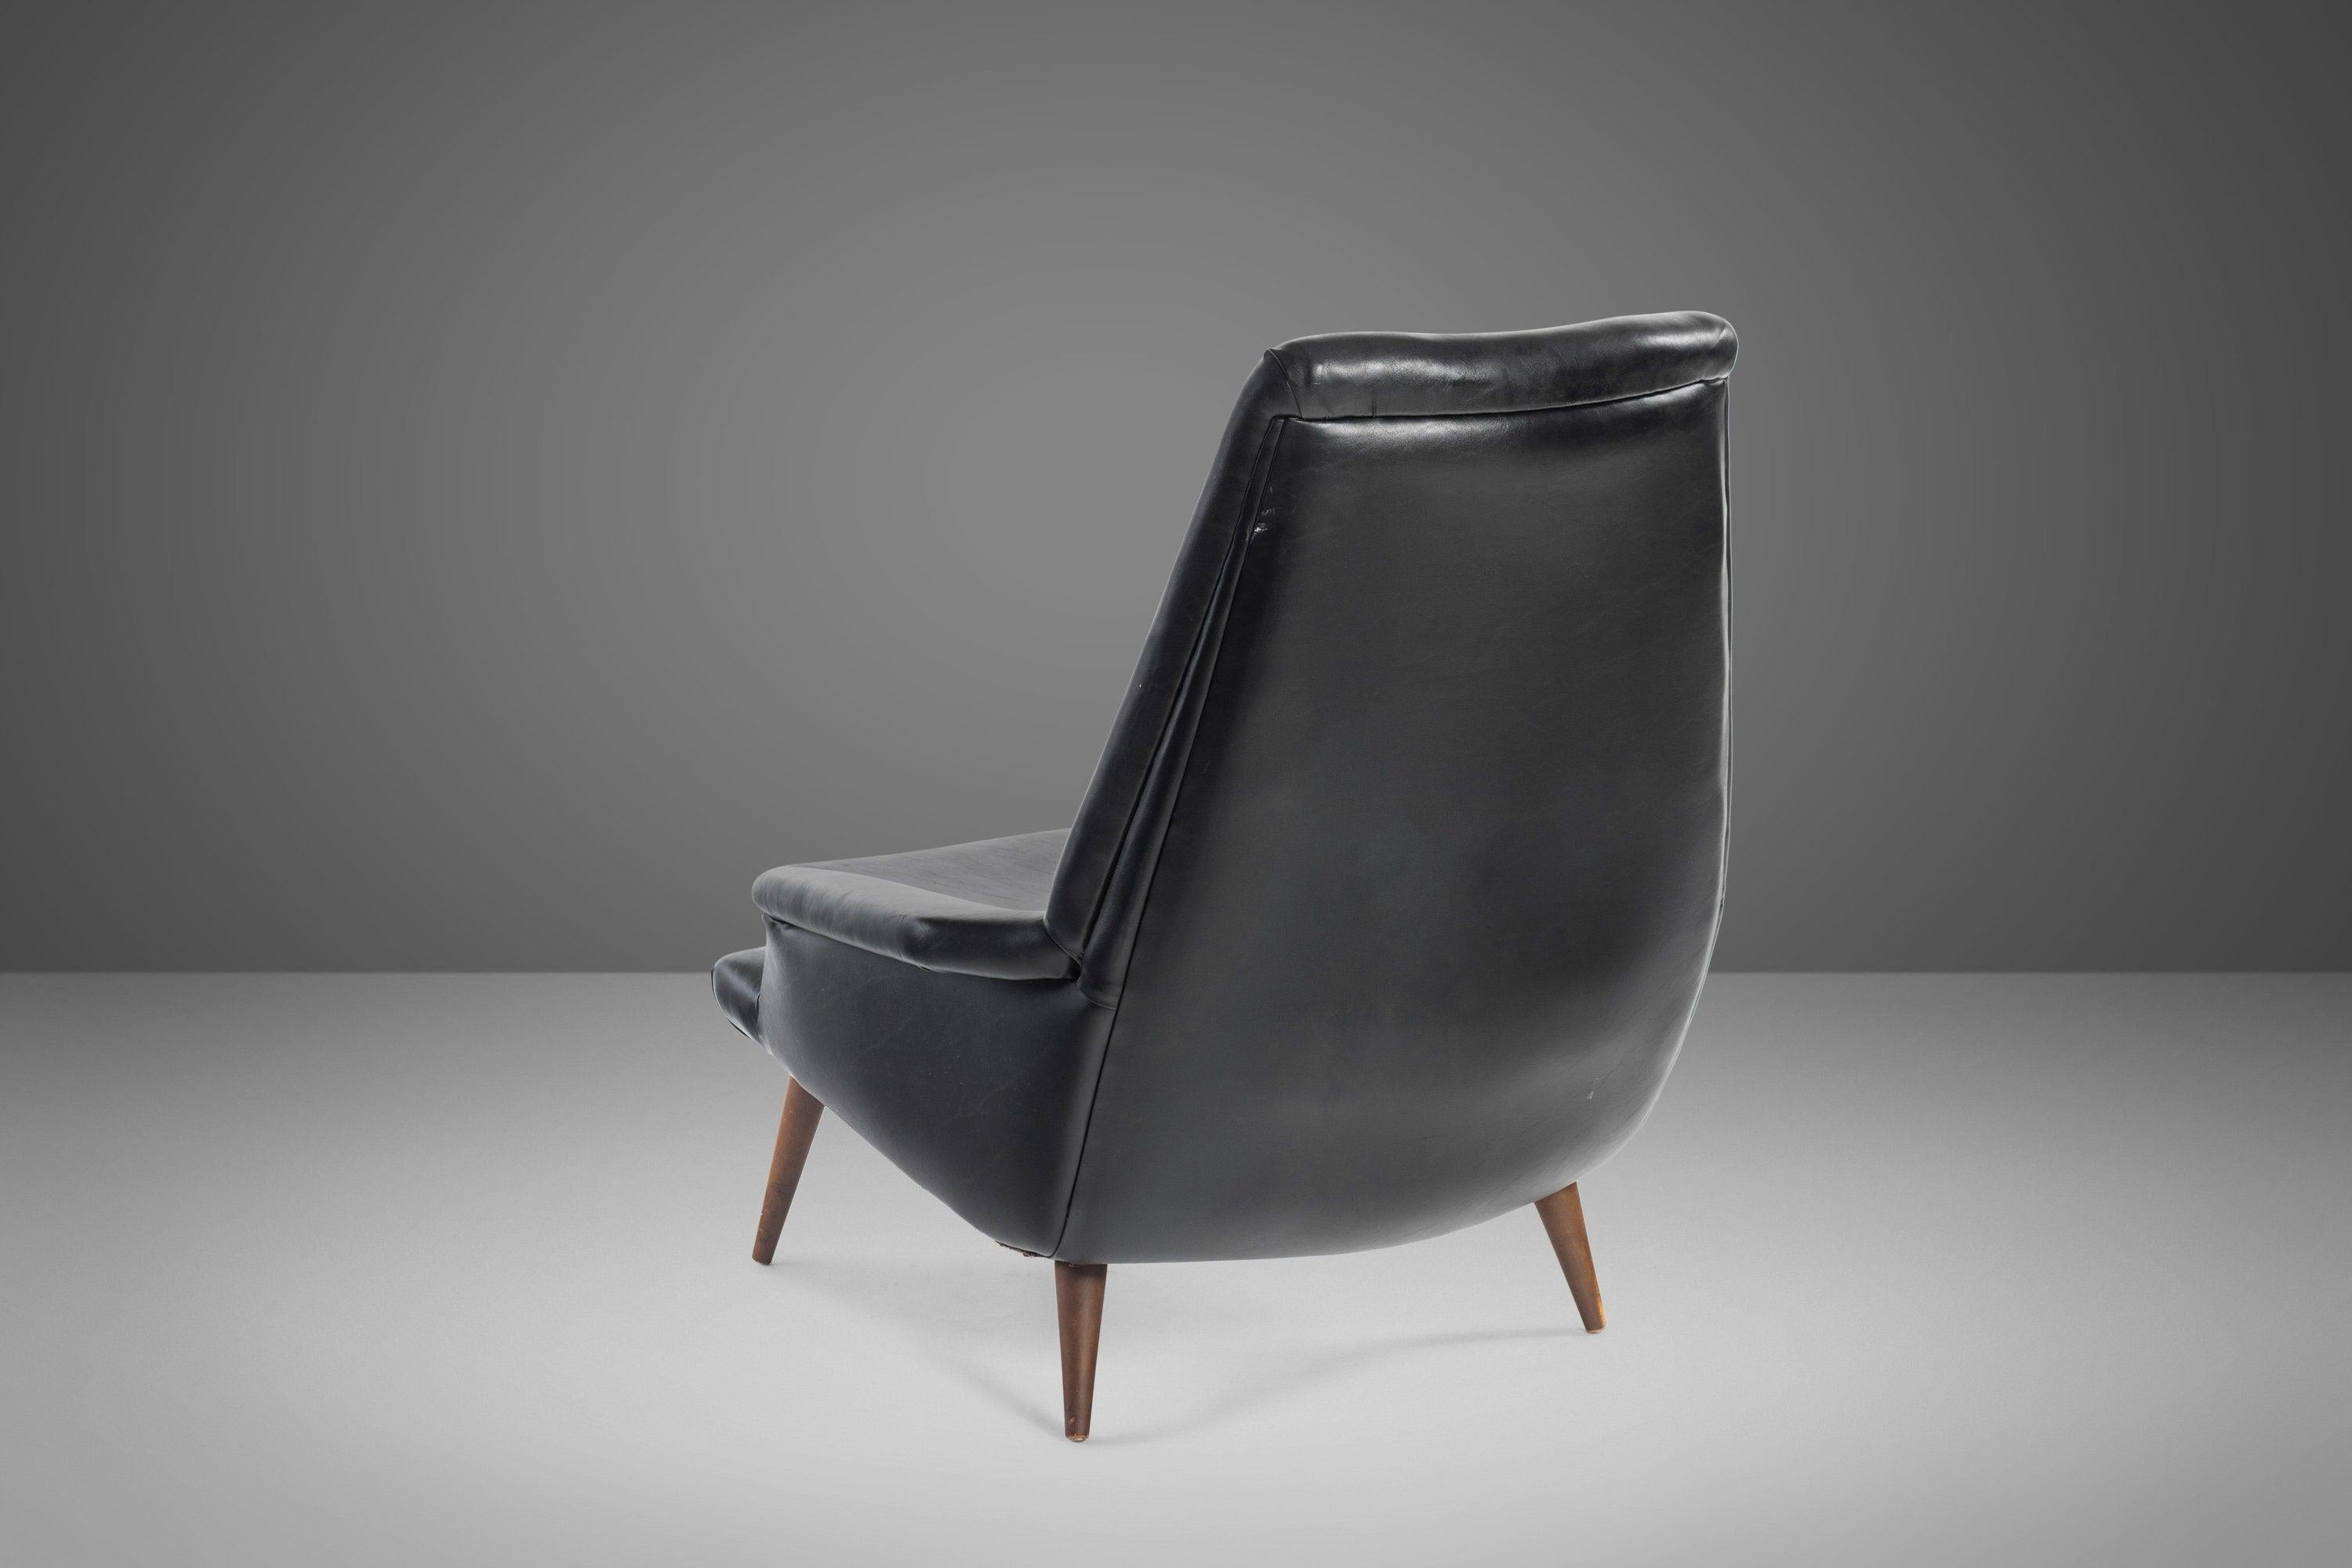 Scandinavian Modern Danish Modern High Back Lounge Chair in Original Vinyl Upholstery, c. 1960s For Sale